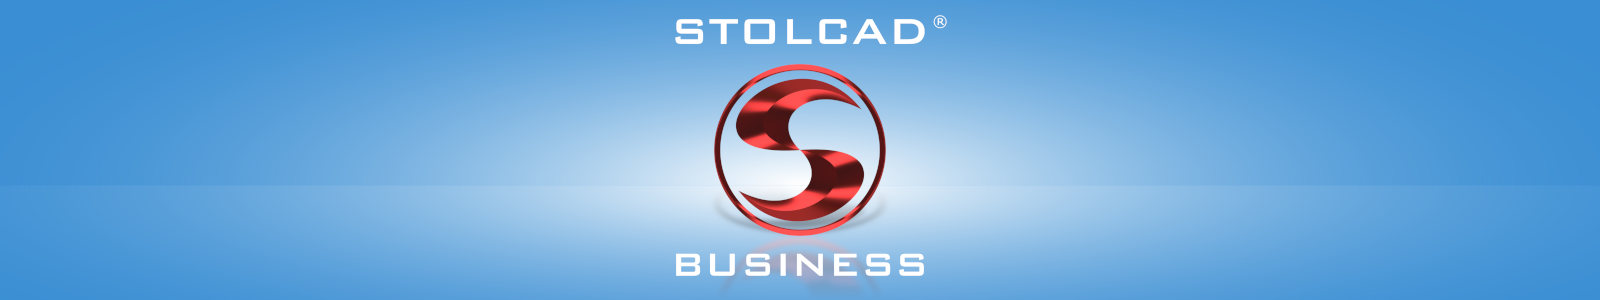 Stolcad Business - программа для продавцов окон, дверей и жалюзи